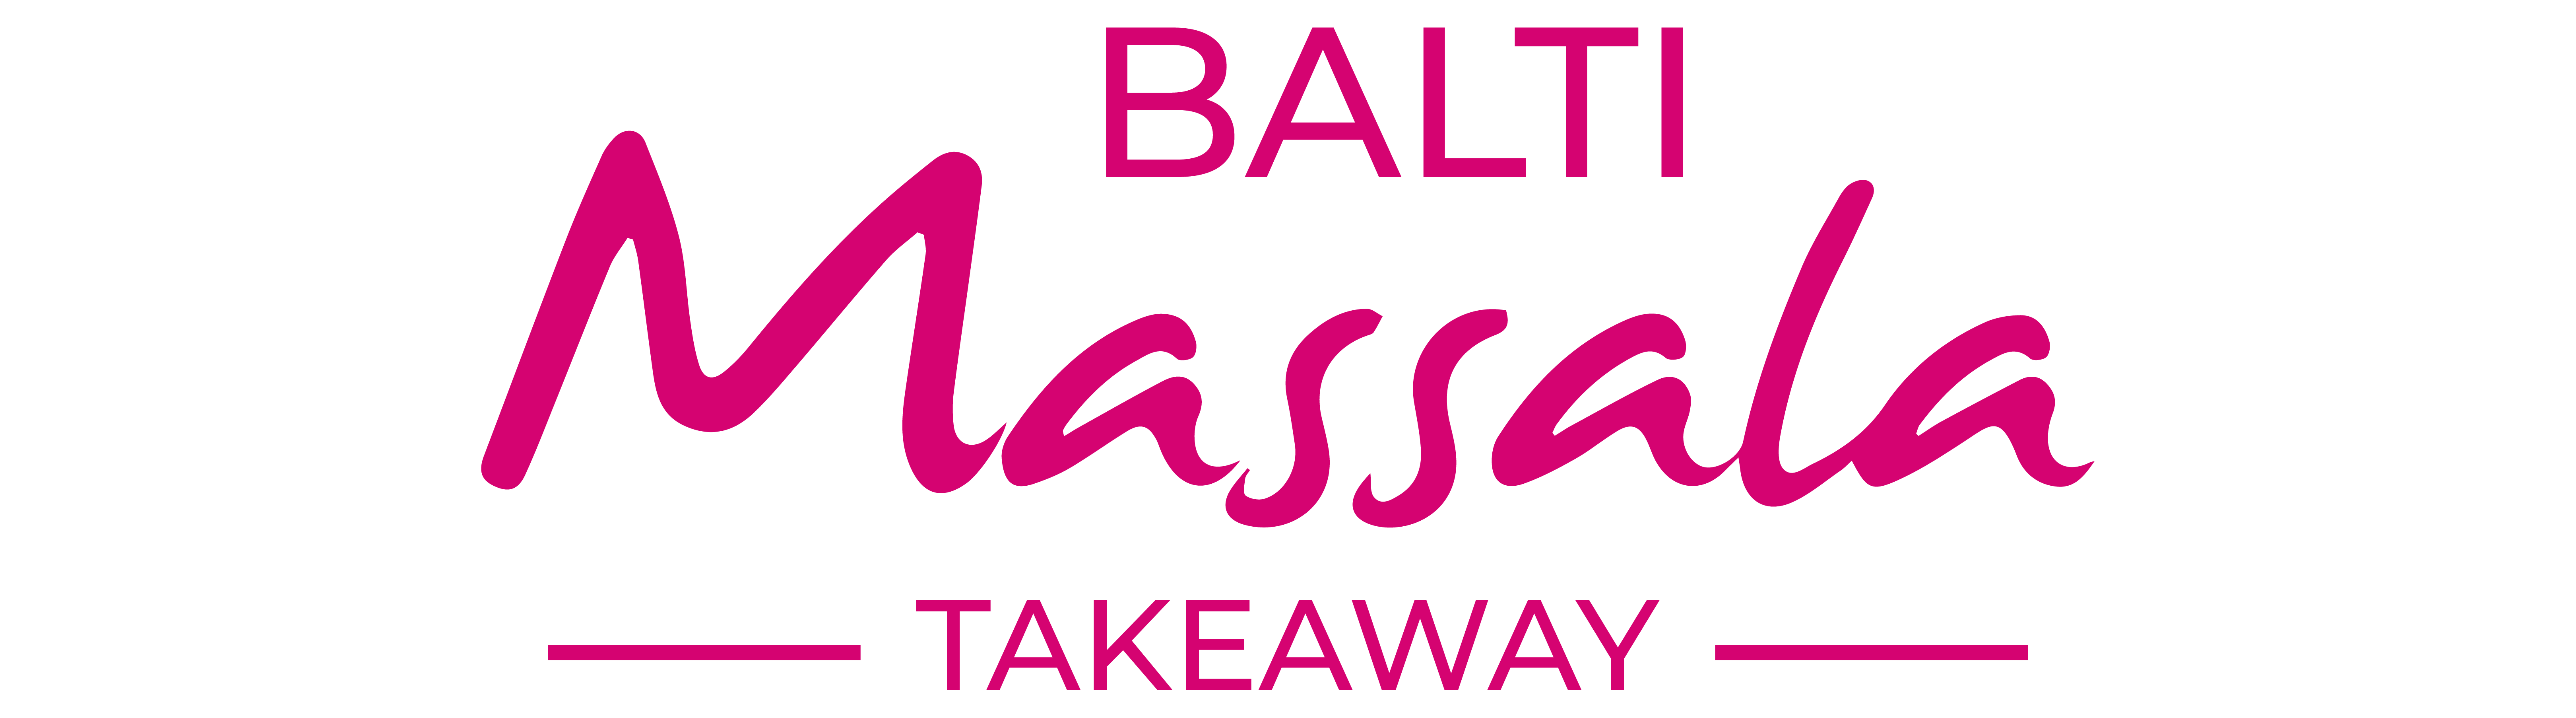 Balti Massala Liverpool logo